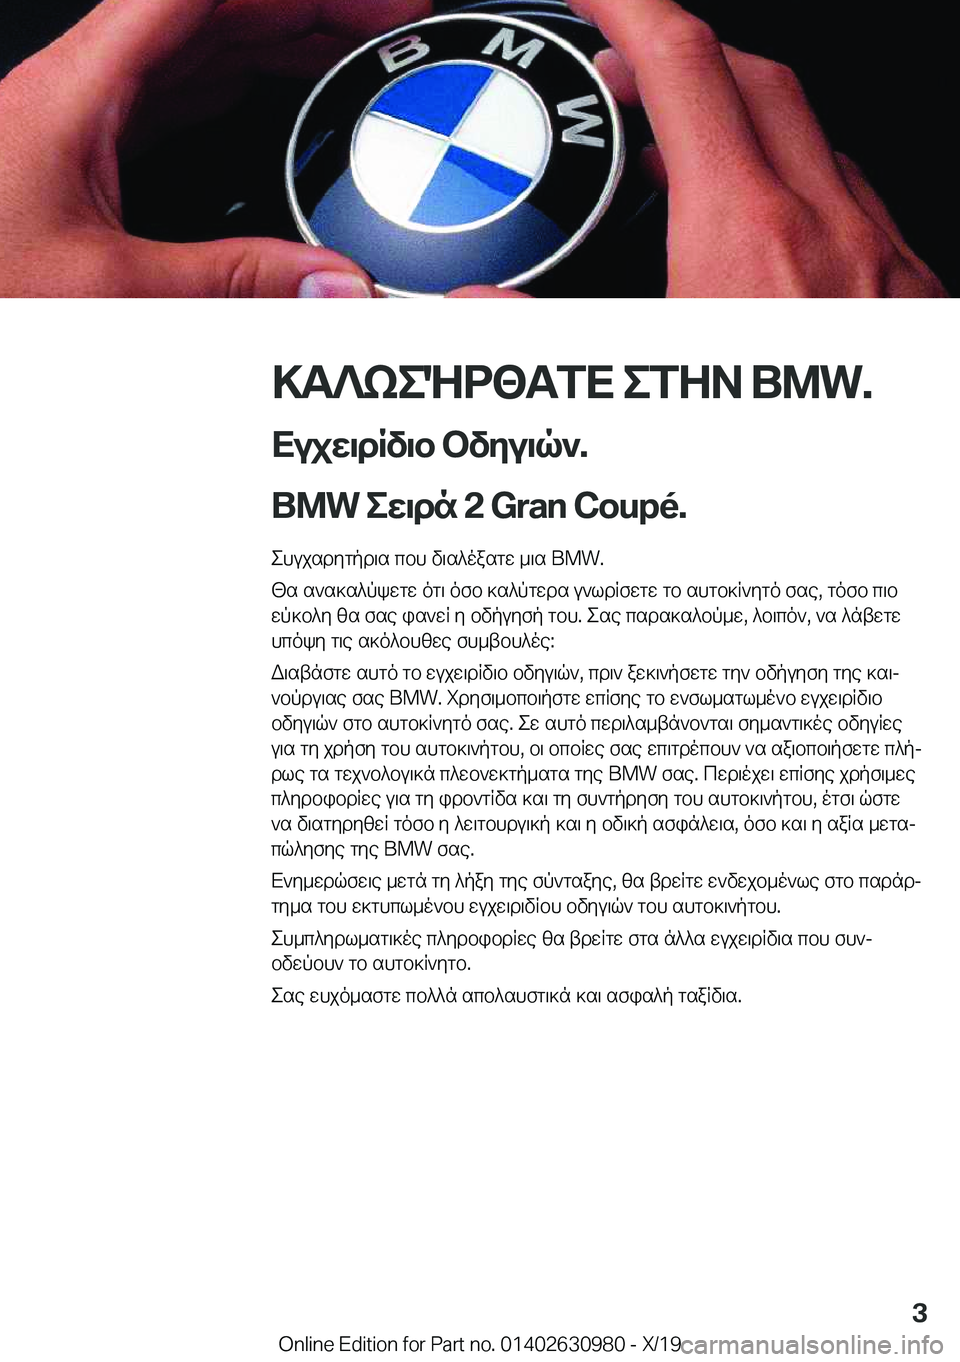 BMW 2 SERIES GRAN COUPE 2020  ΟΔΗΓΌΣ ΧΡΉΣΗΣ (in Greek) >T?keNd<TfX�efZA��B�M�W�.
Xujw\dRv\b�bvyu\q`�.
�B�M�W�ew\dn��2��G�r�a�n��C�o�u�p�